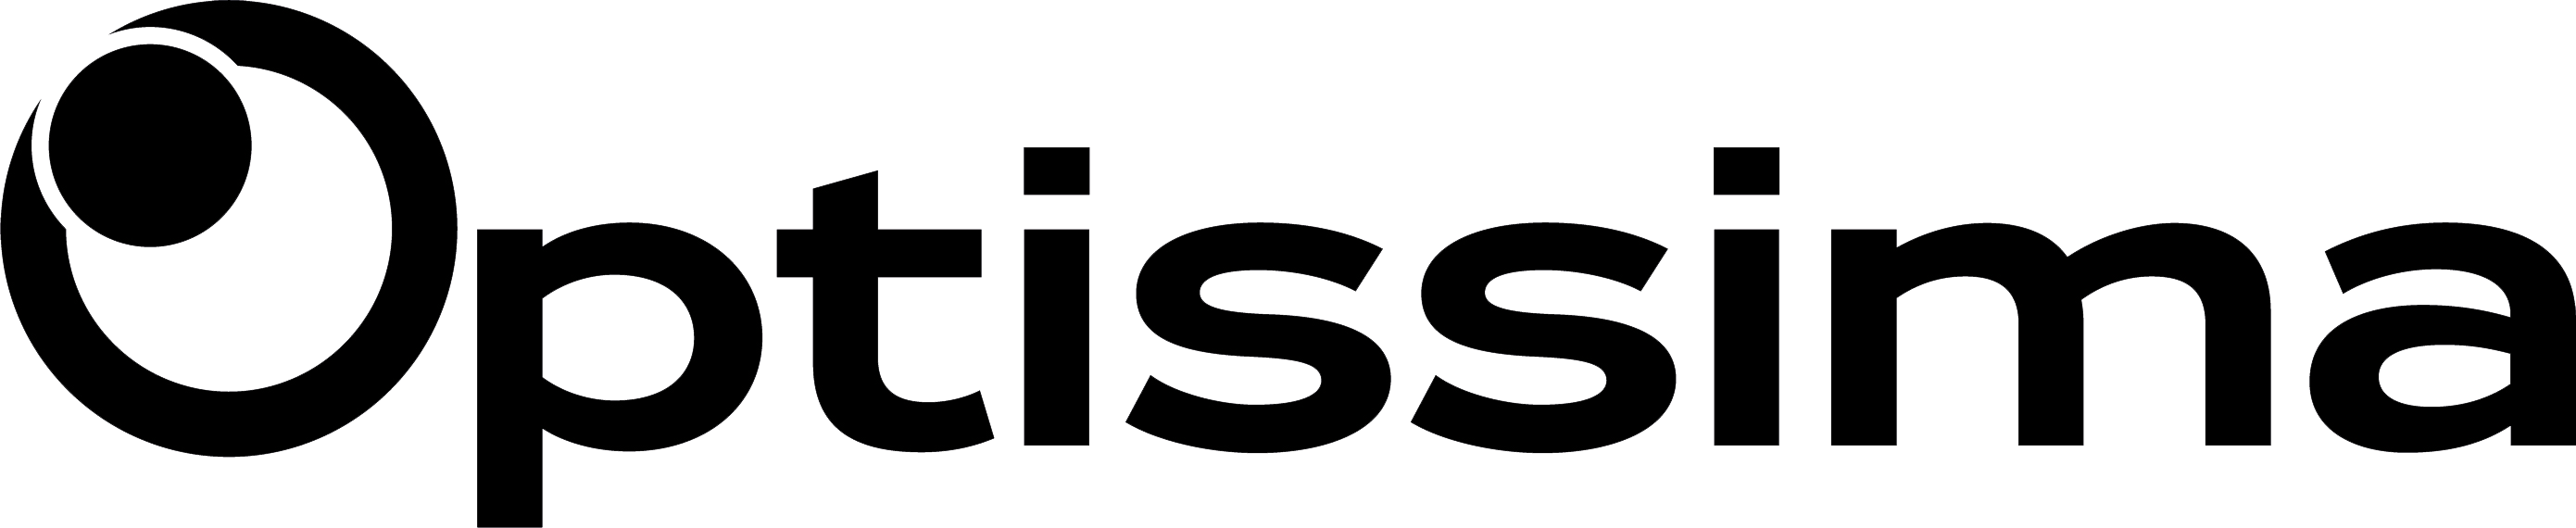 optissima-logo